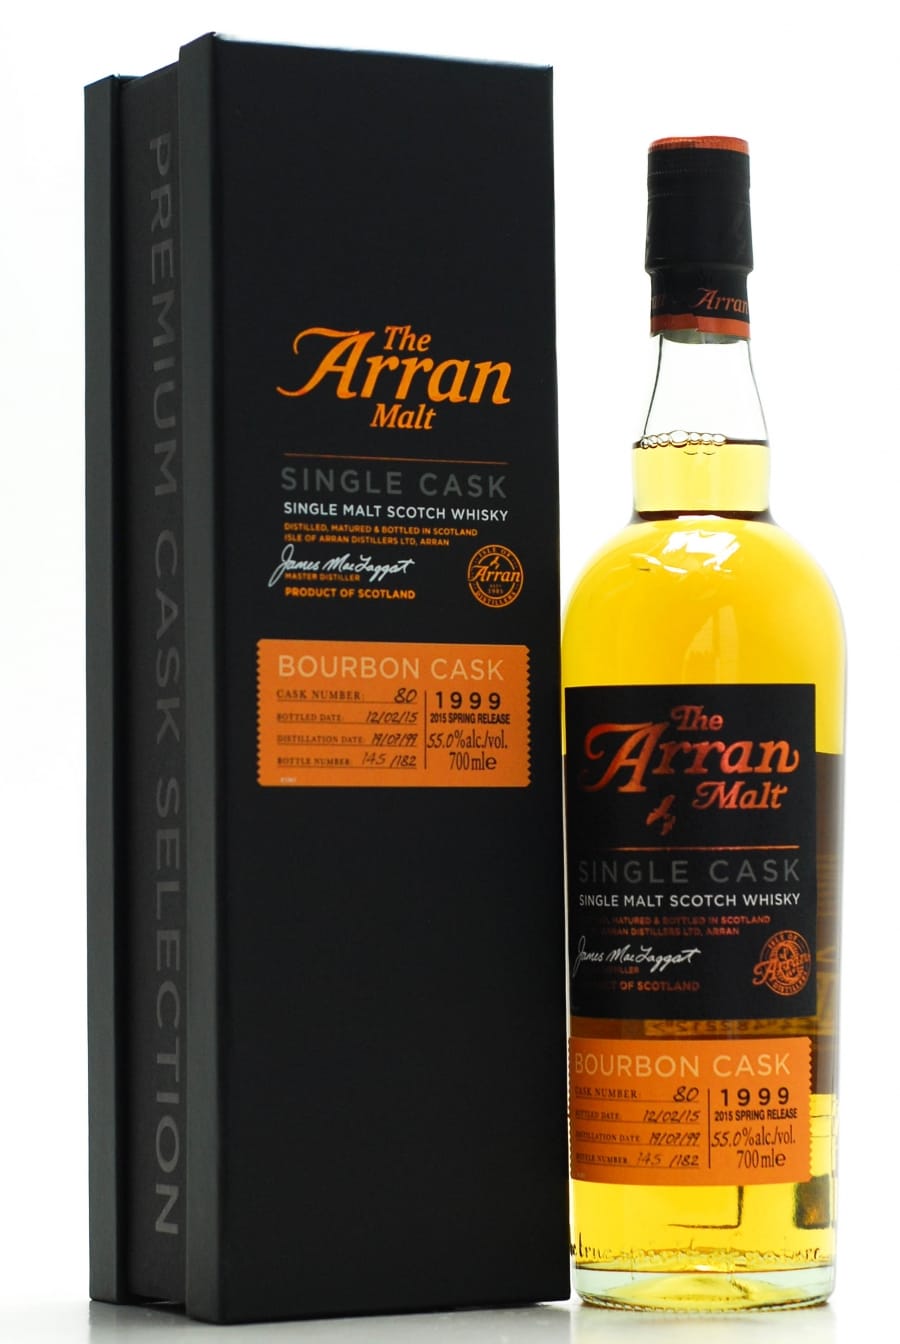 Arran - 2014 Spring Release Bourbon Cask 80 55% 1999